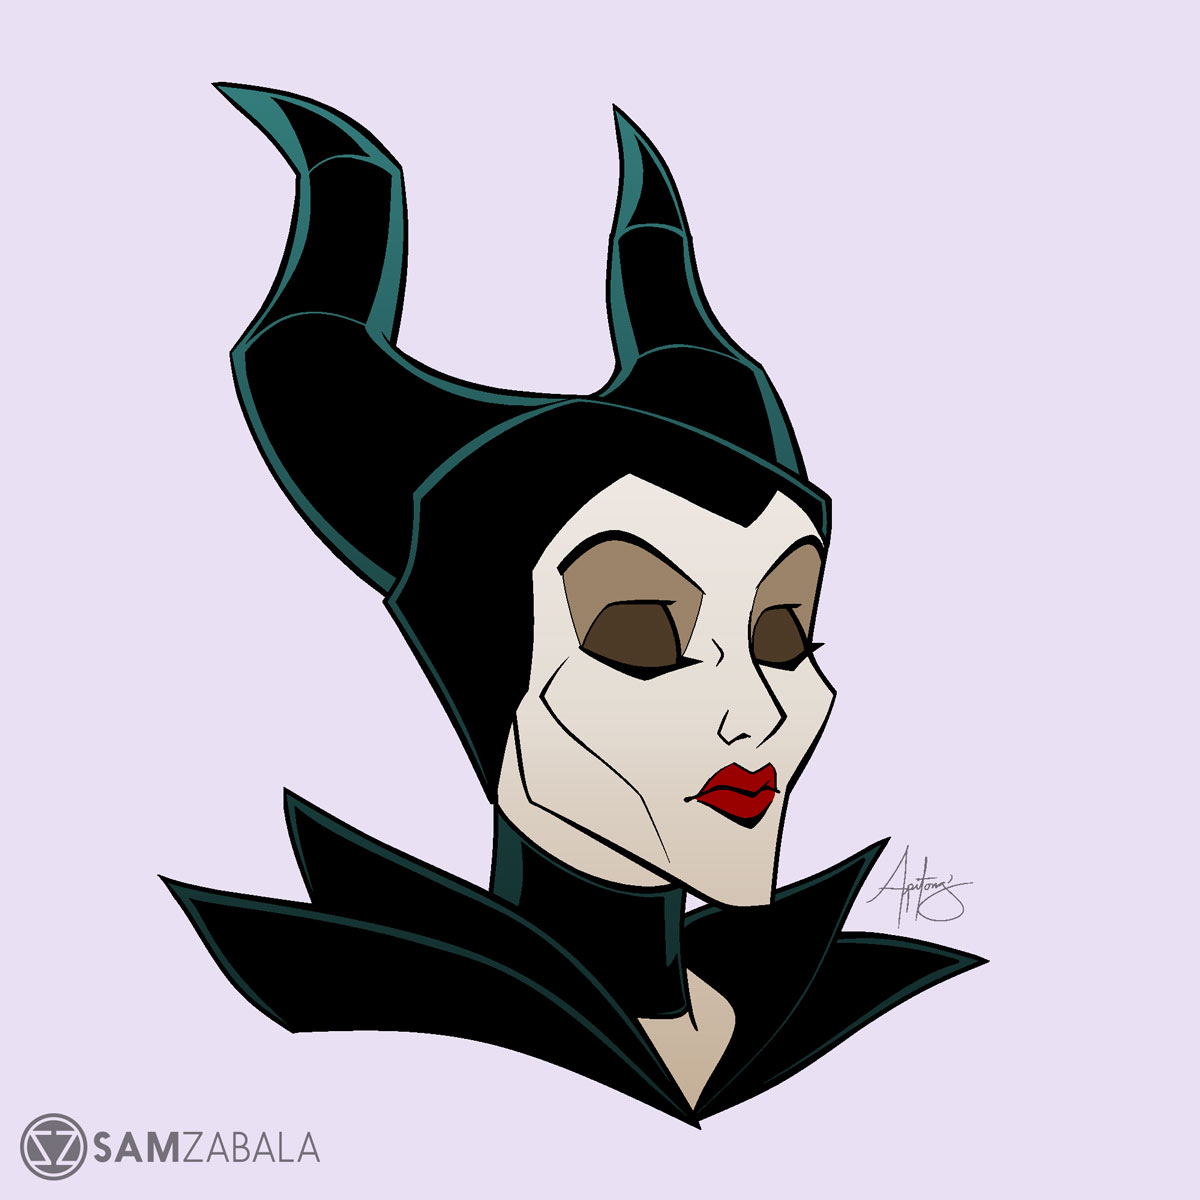 Full Maleficent illustration